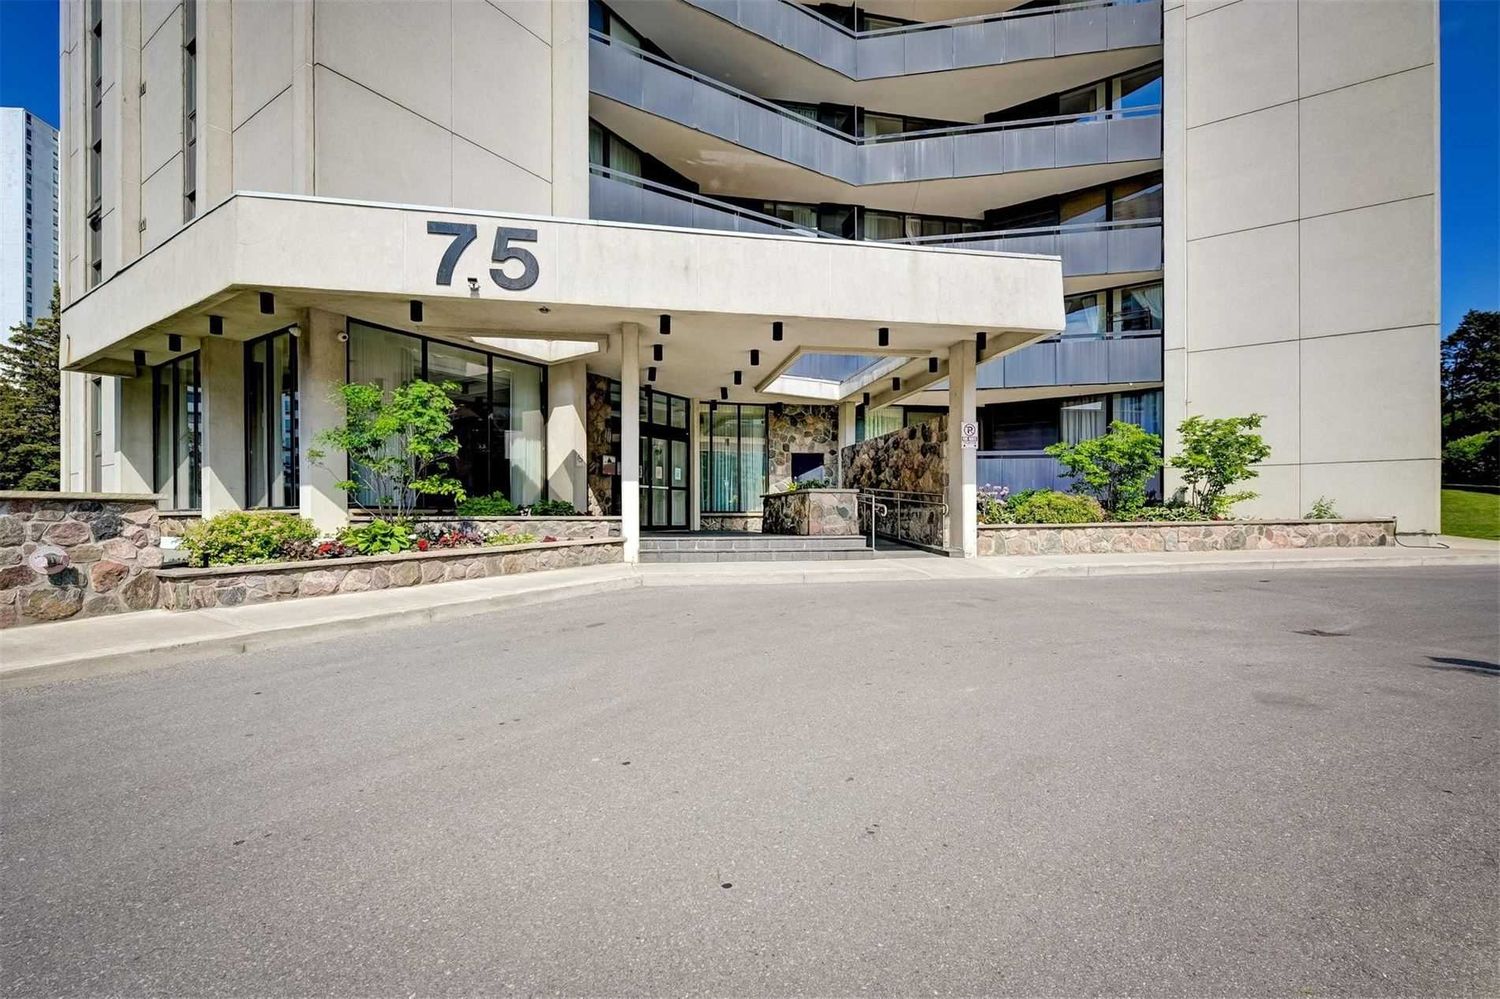 75 Graydon Hall Drive. 75 Graydon Hall Drive Condos is located in  North York, Toronto - image #2 of 2